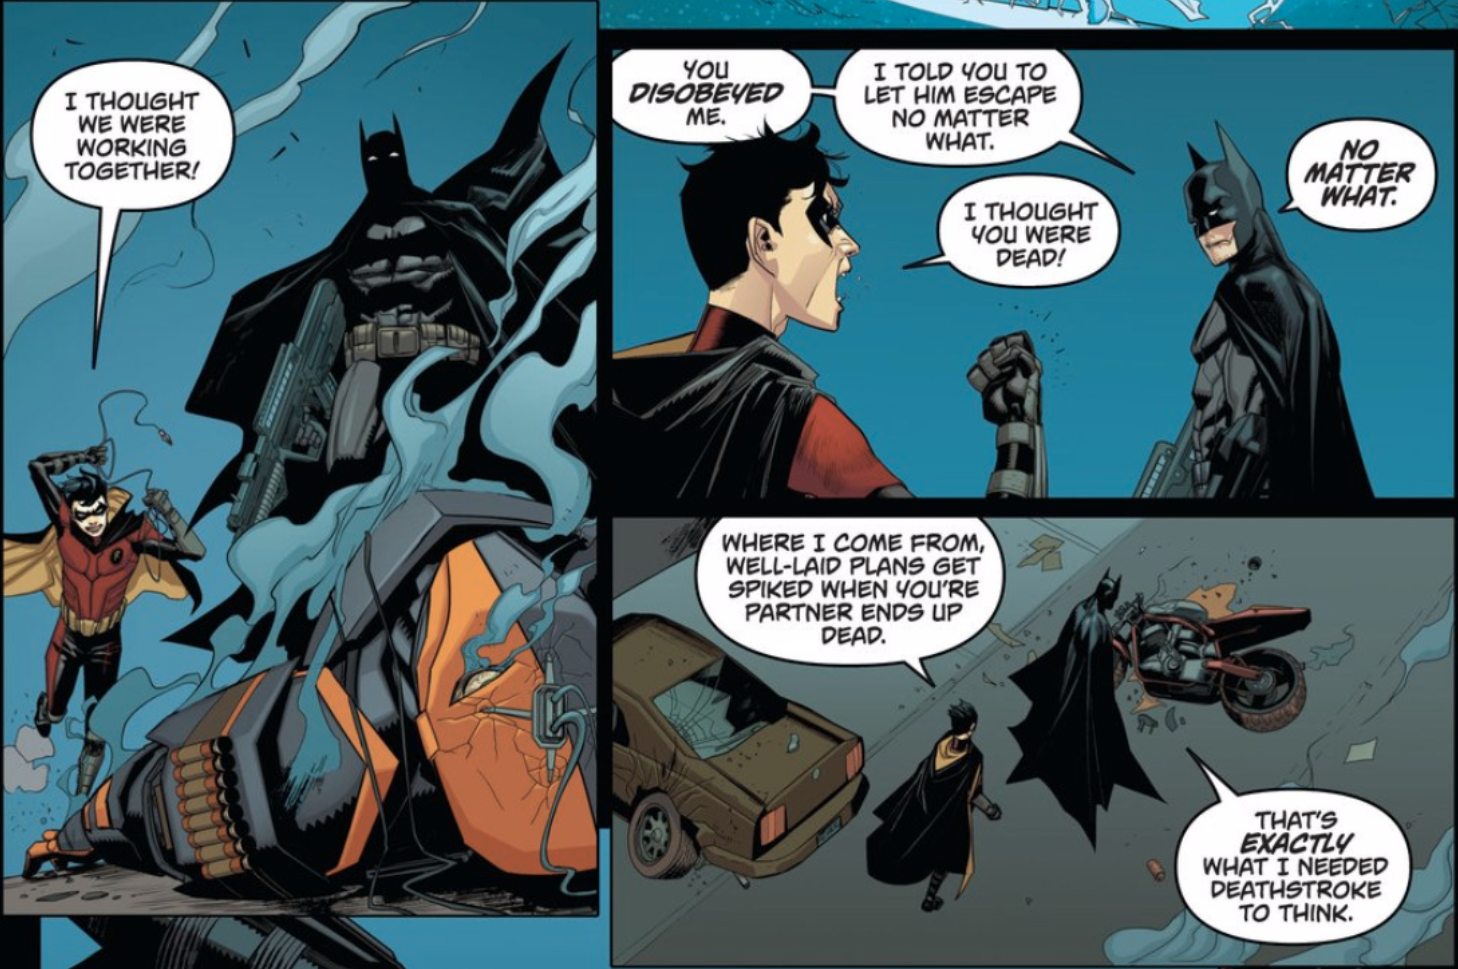 The Newest Arkham Knight Comic Makes Some Shrewd Tweaks To Batman Lore